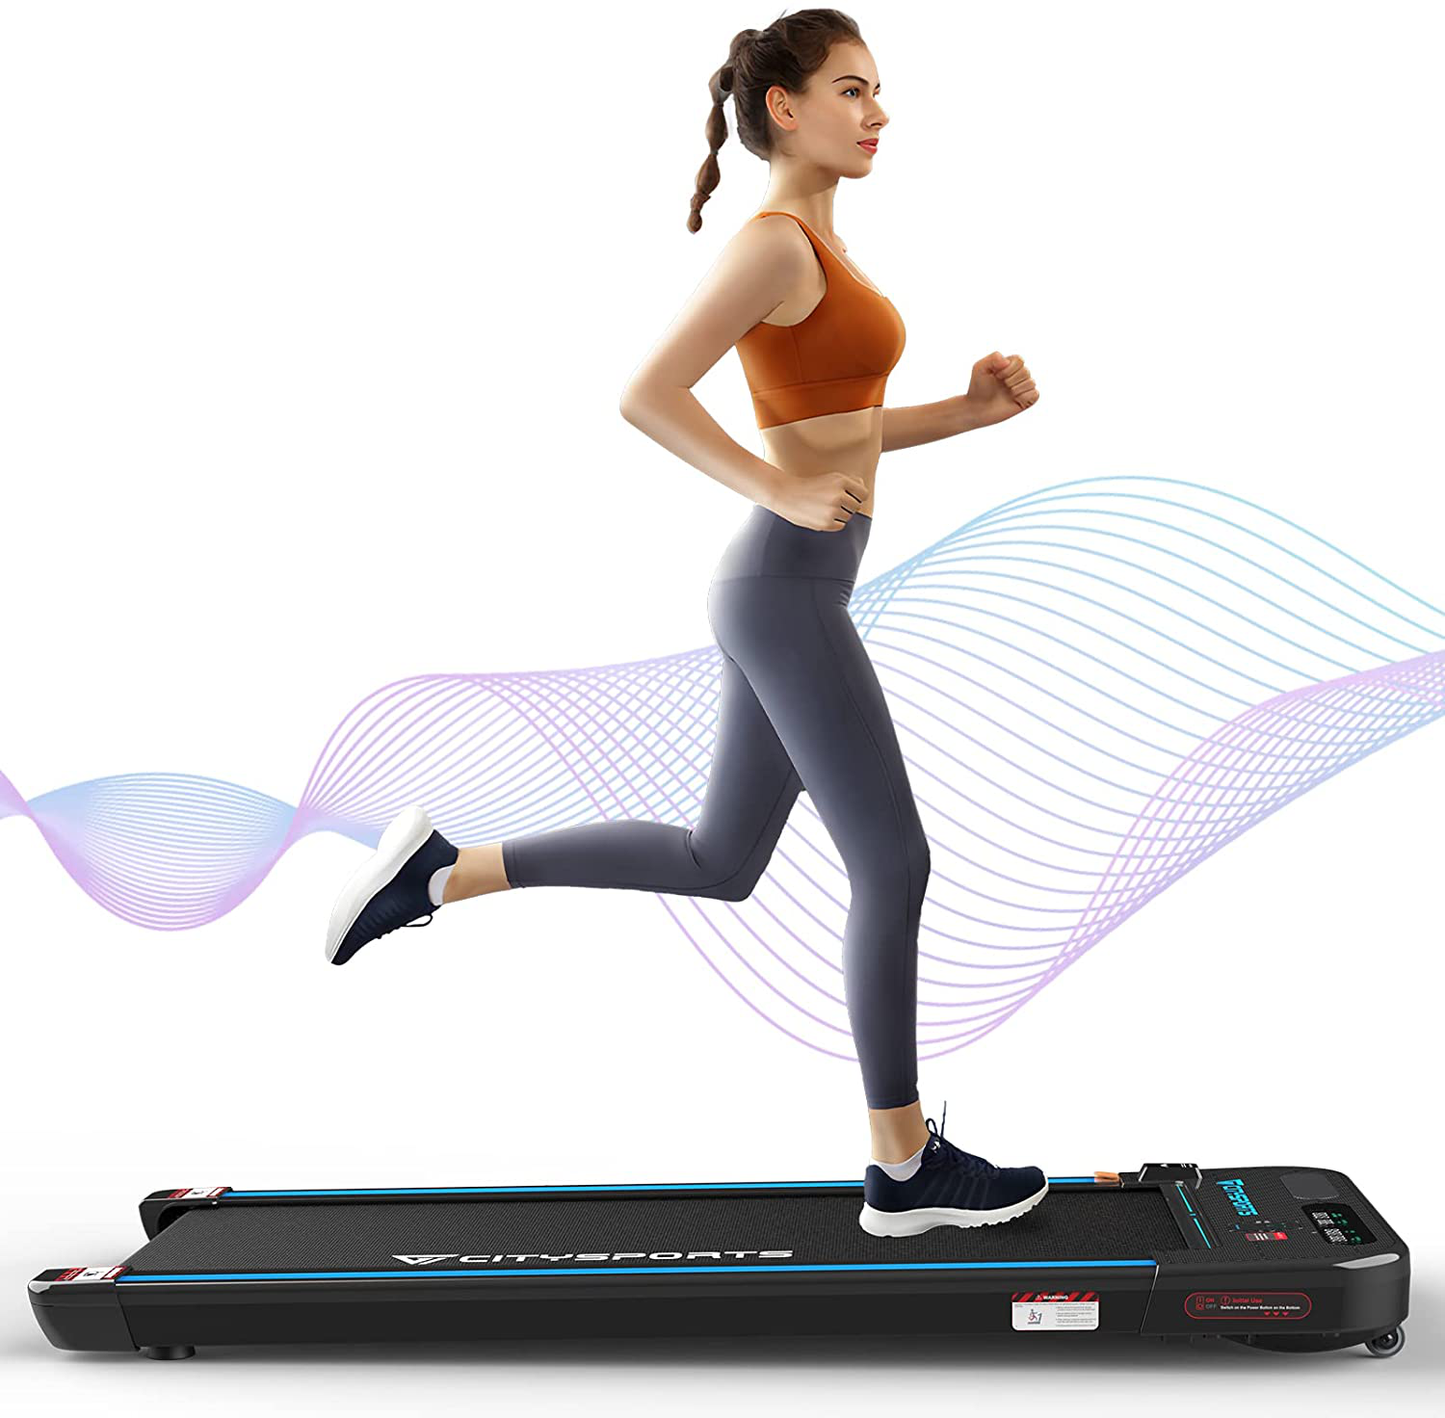 CITYSPORTS Treadmills for Home  Treadmill, Treadmill workout, Treadmill  walking